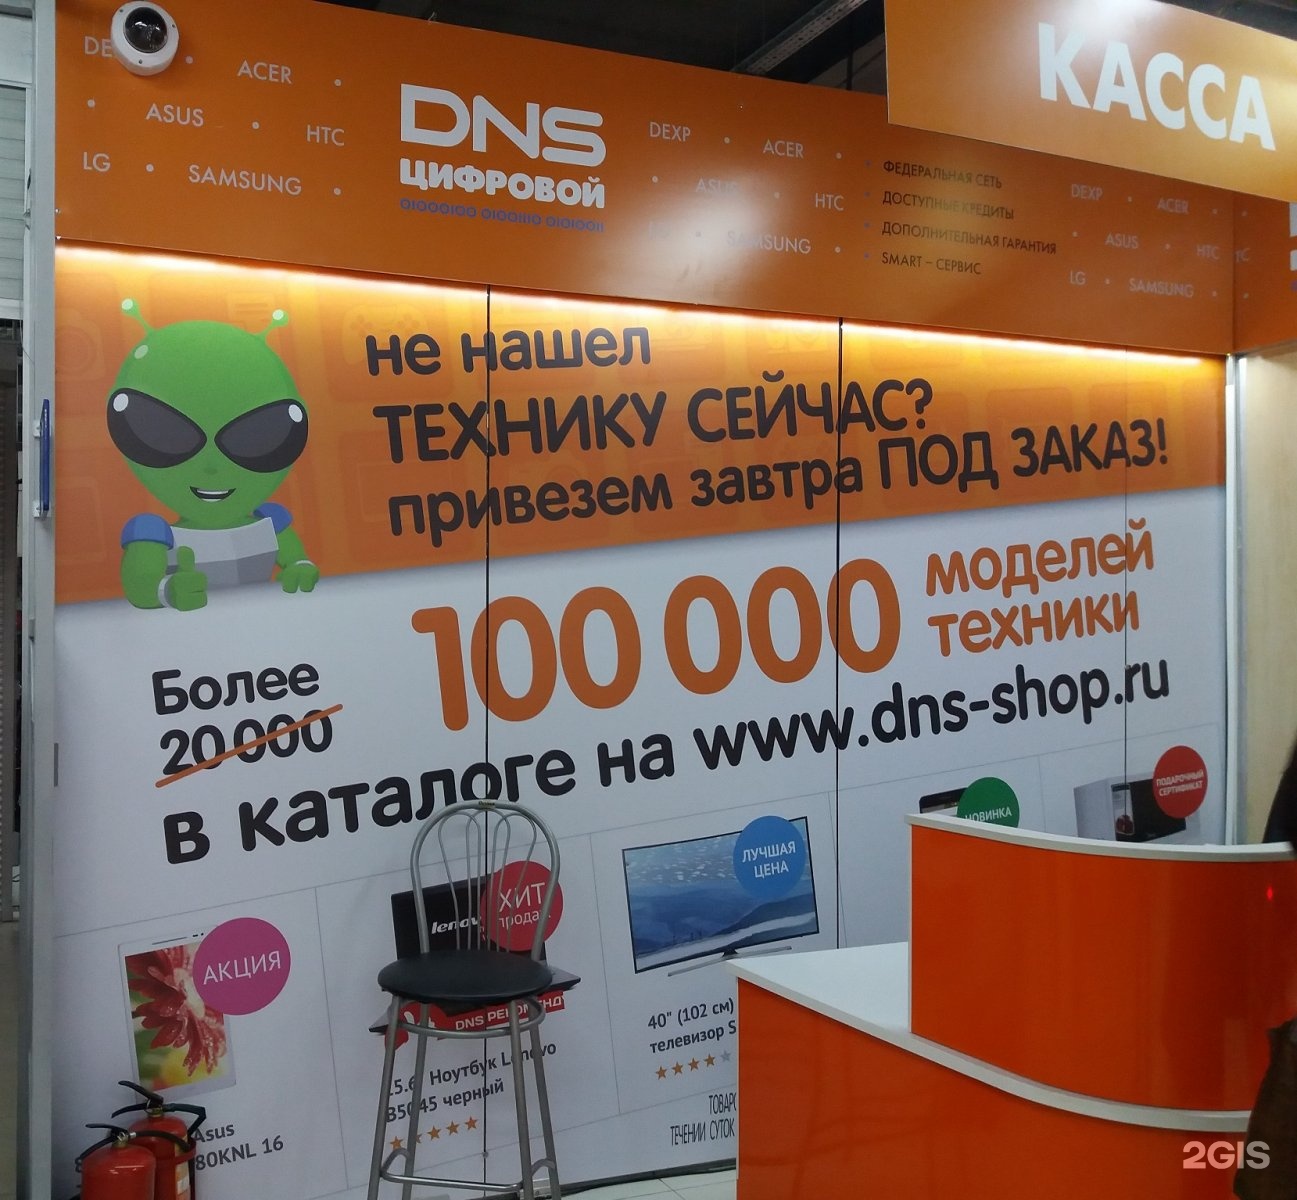 DNS Samsung. Самсунг ДНС. Сэм ДНС. Самсунг ДНС Серов. Samsung dns shop